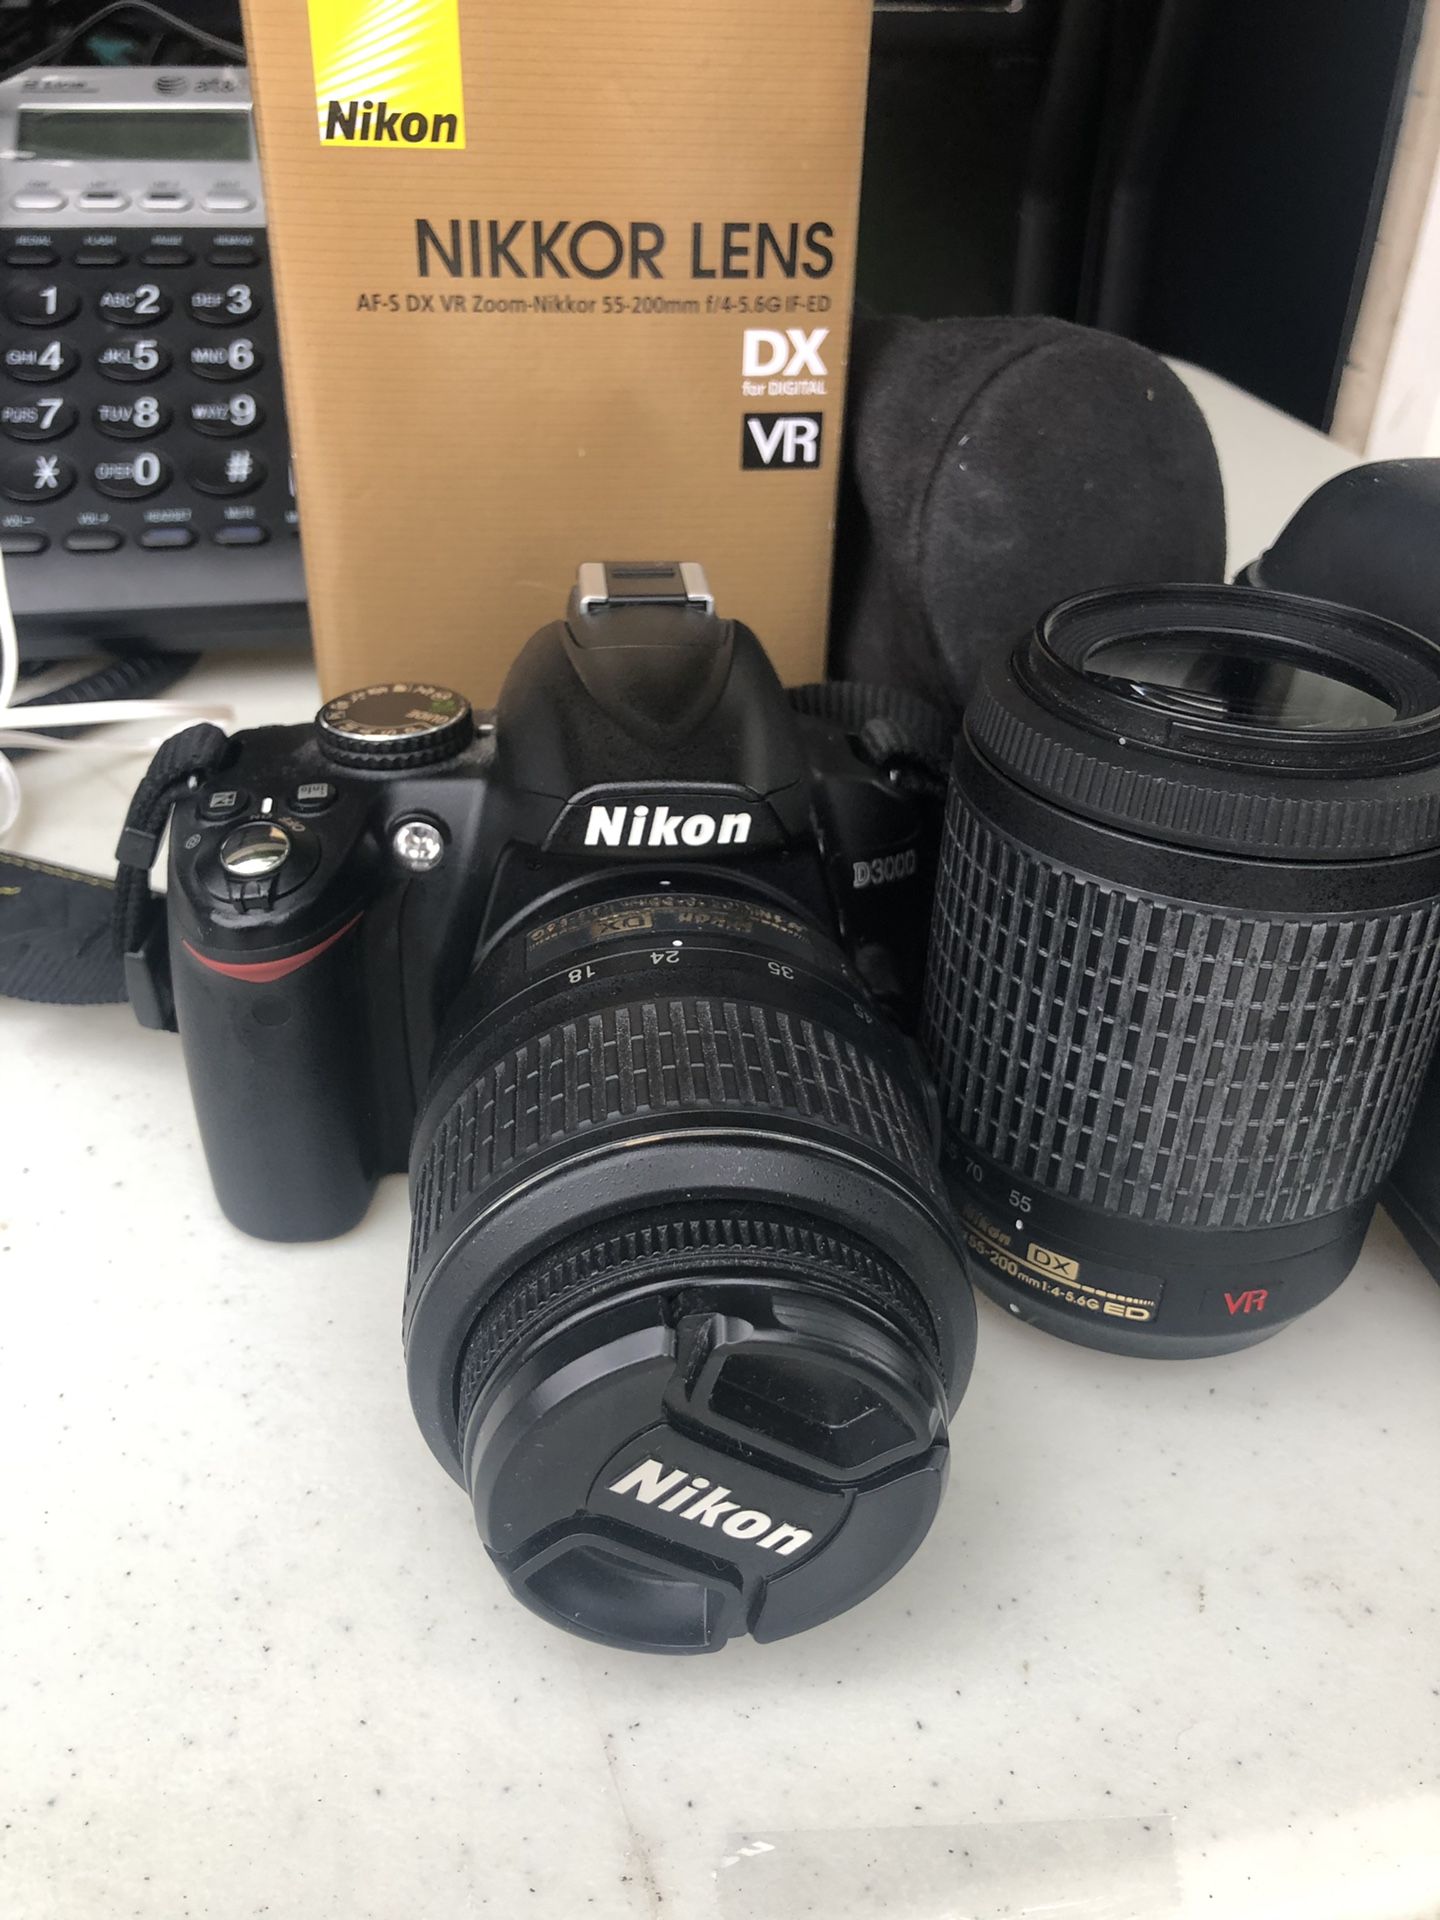 Nikon D3000 with two lenses